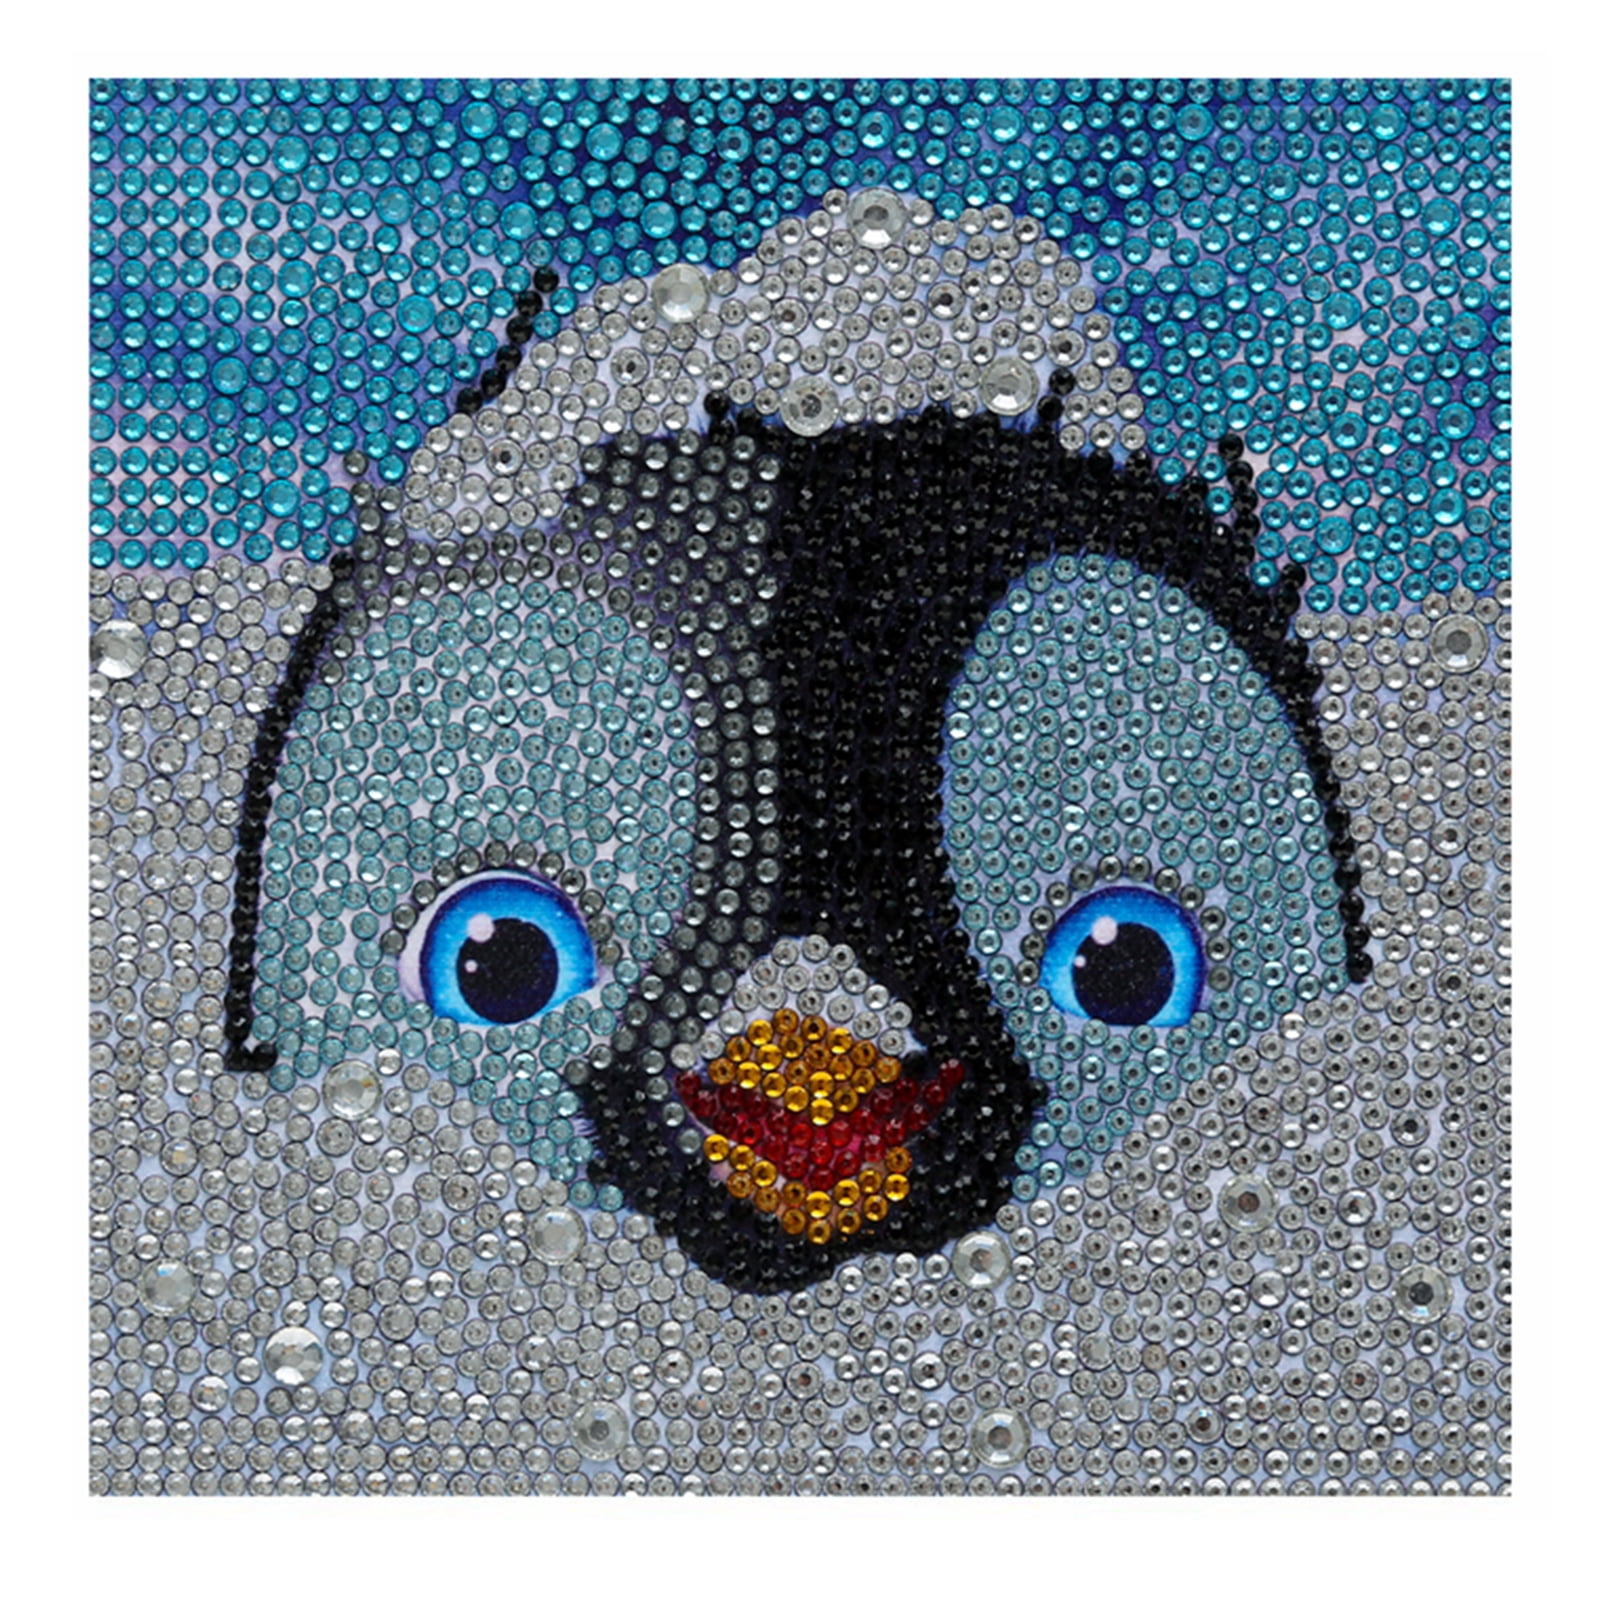 Jungobiu 5D Diamond Painting Kits for Adults Penguin DIY Diamond